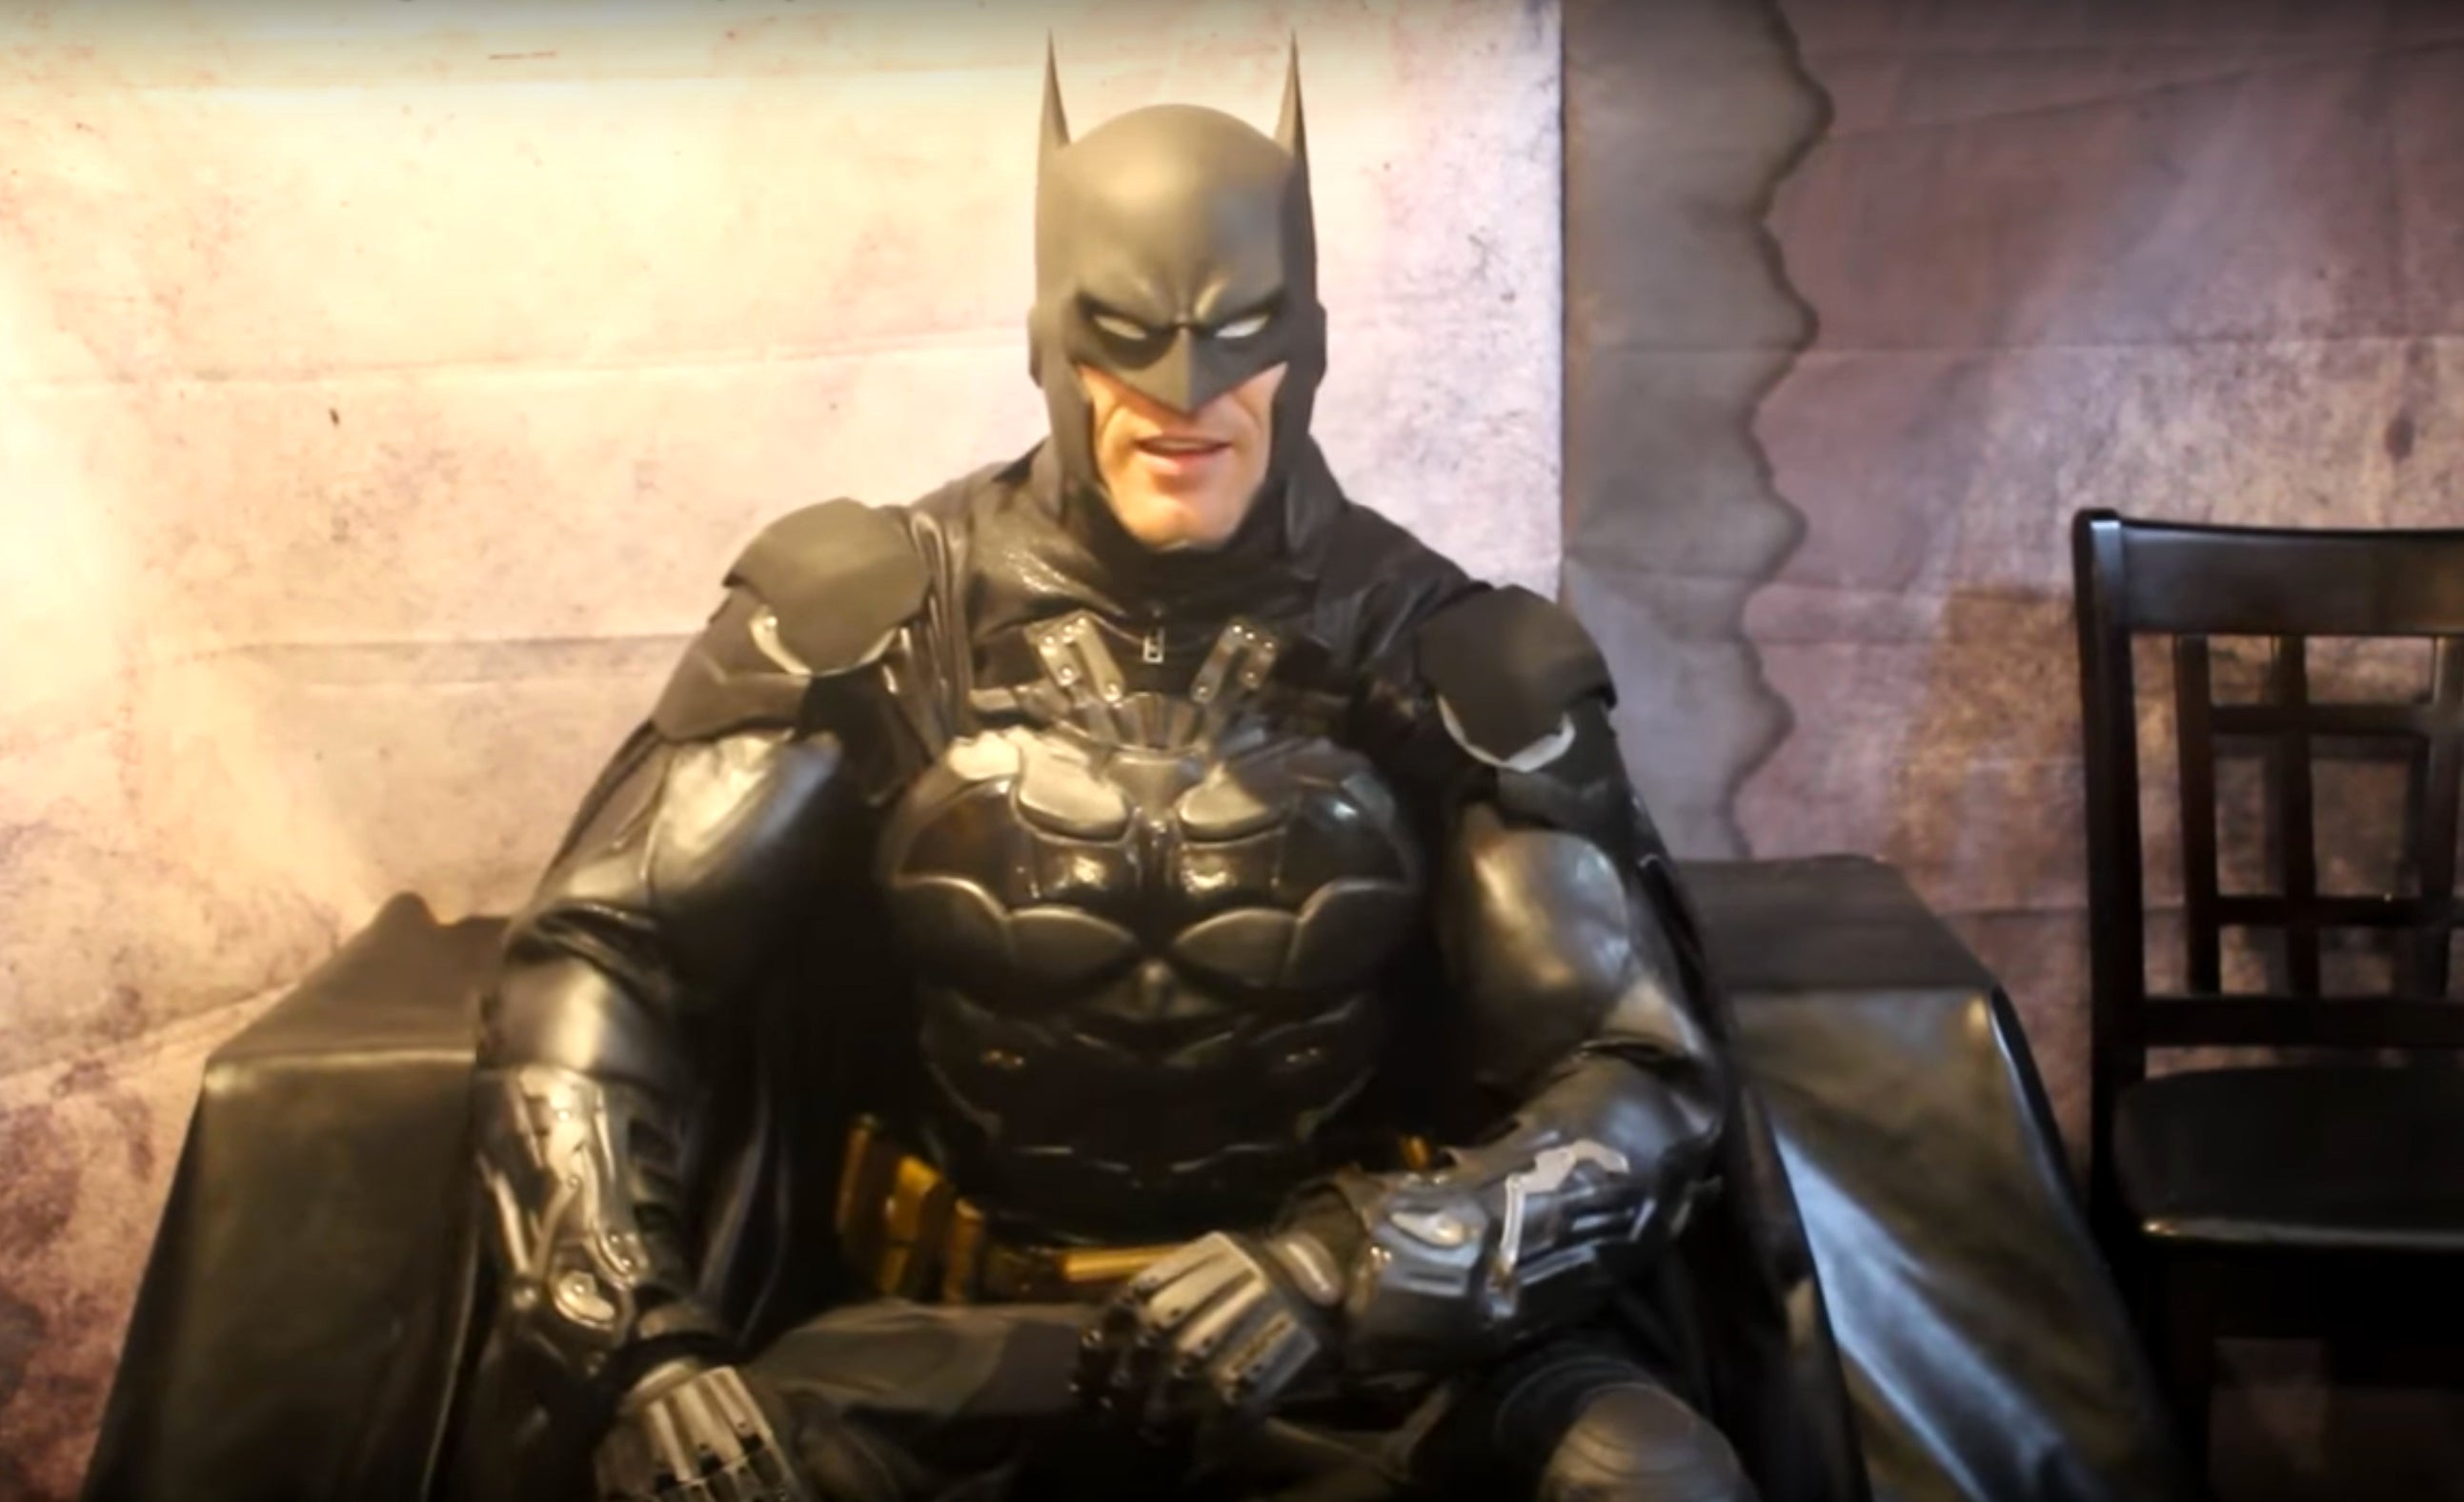 Guinness World Records holder for best Batman cosplay in the world.